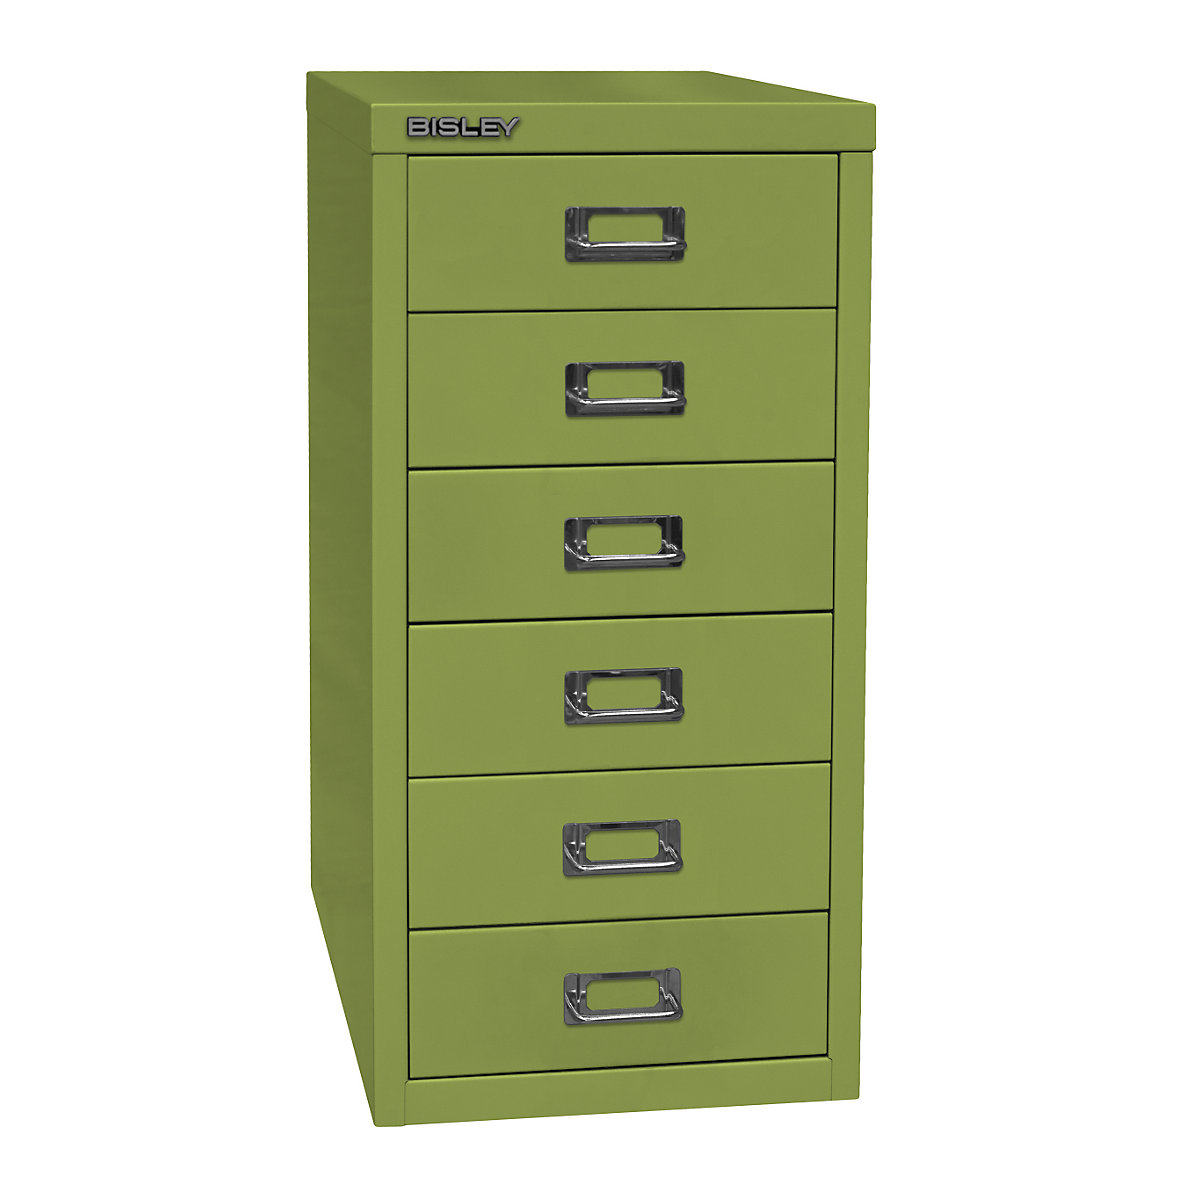 MultiDrawer™ 29 series – BISLEY, A4, 6 drawers, green-11